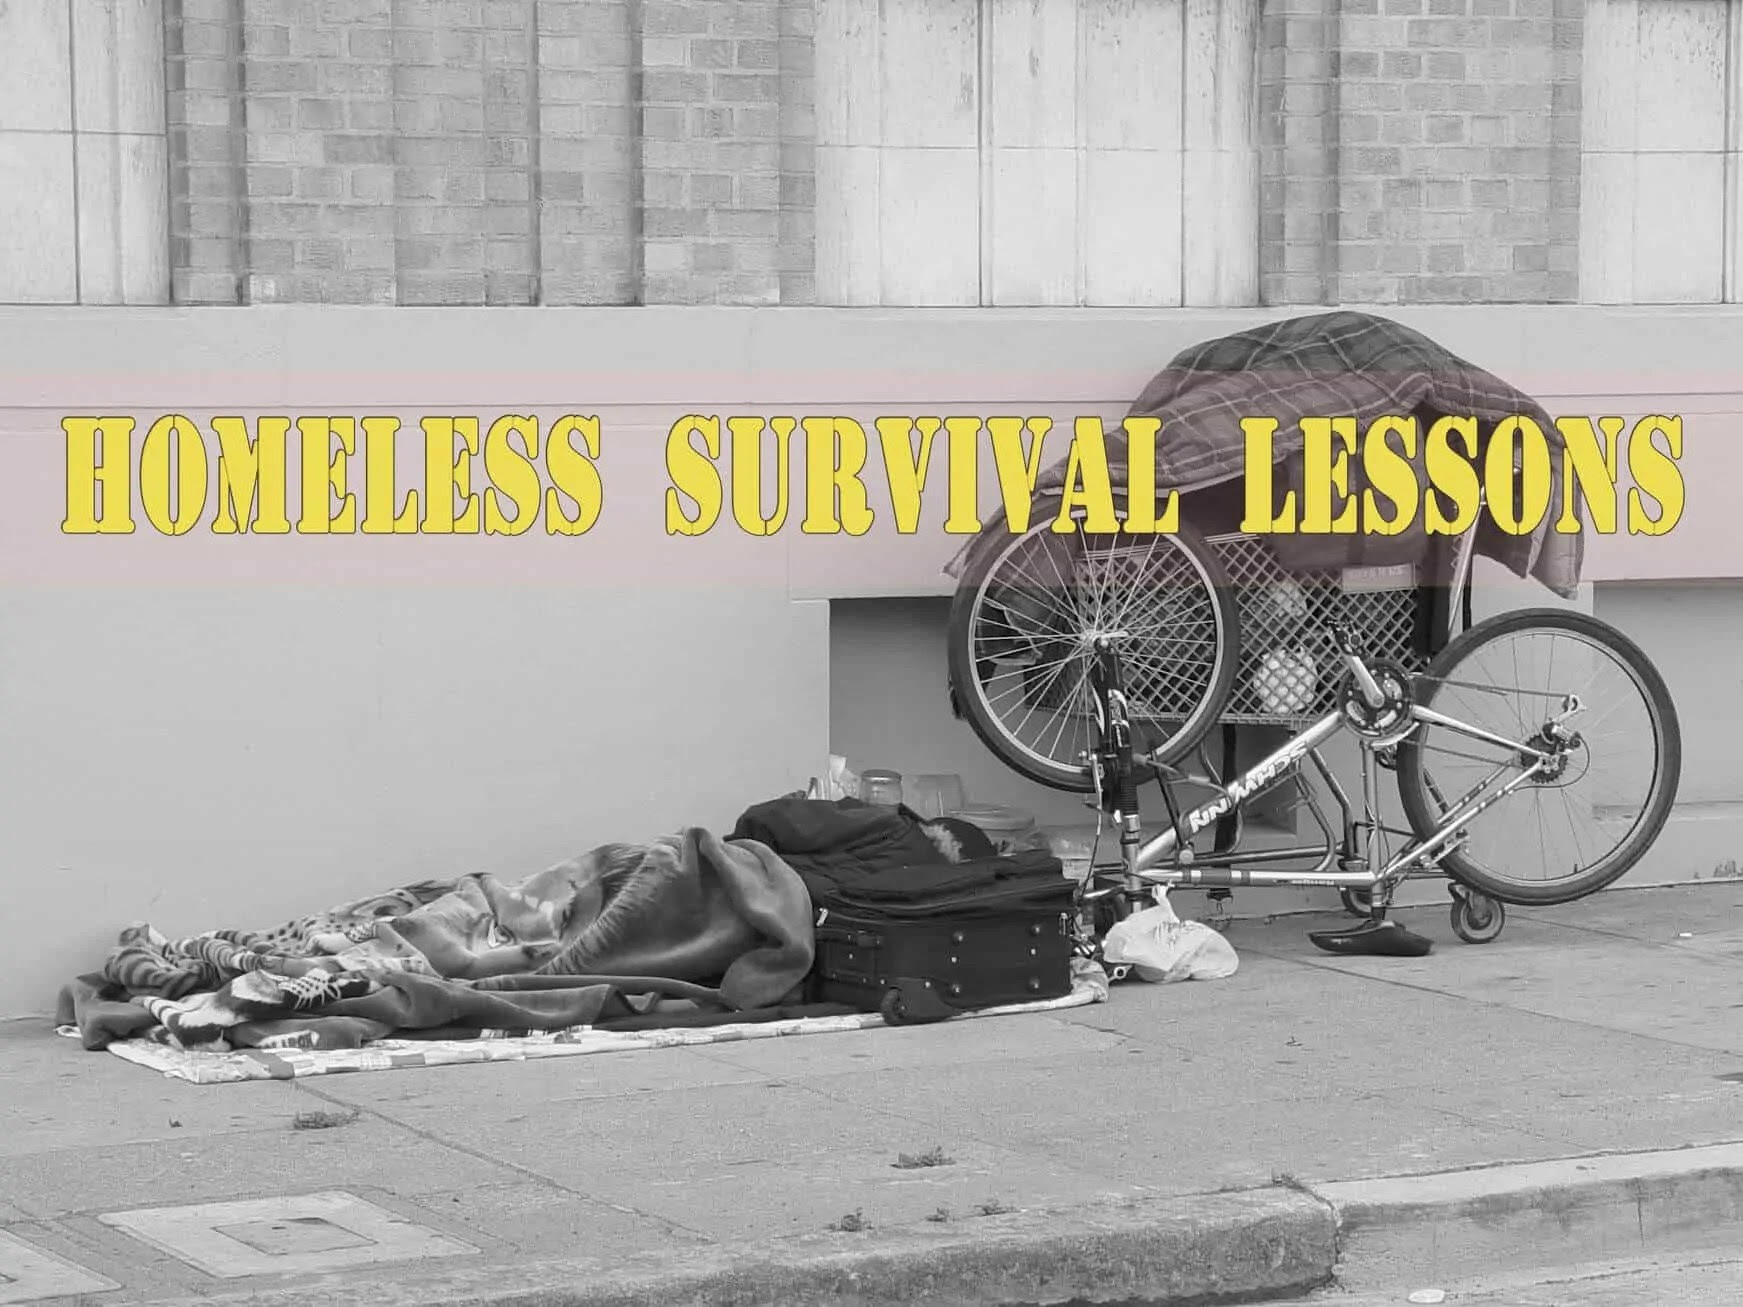 Homeless Survival Lessons – Good tips for all